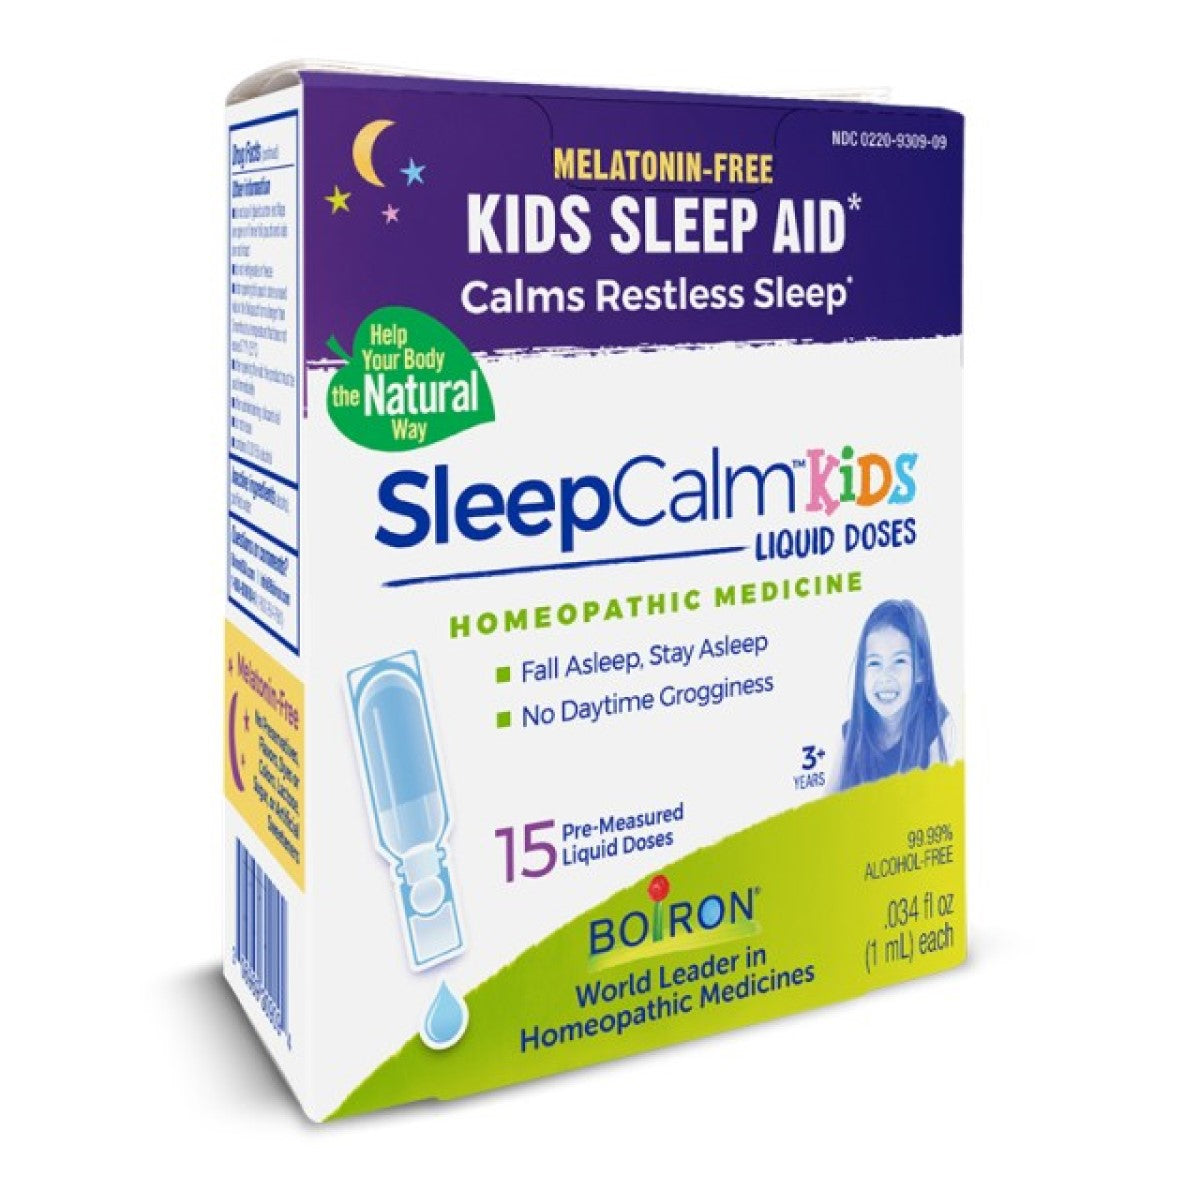 Primary Image of SleepCalm Kids Liquid Doses